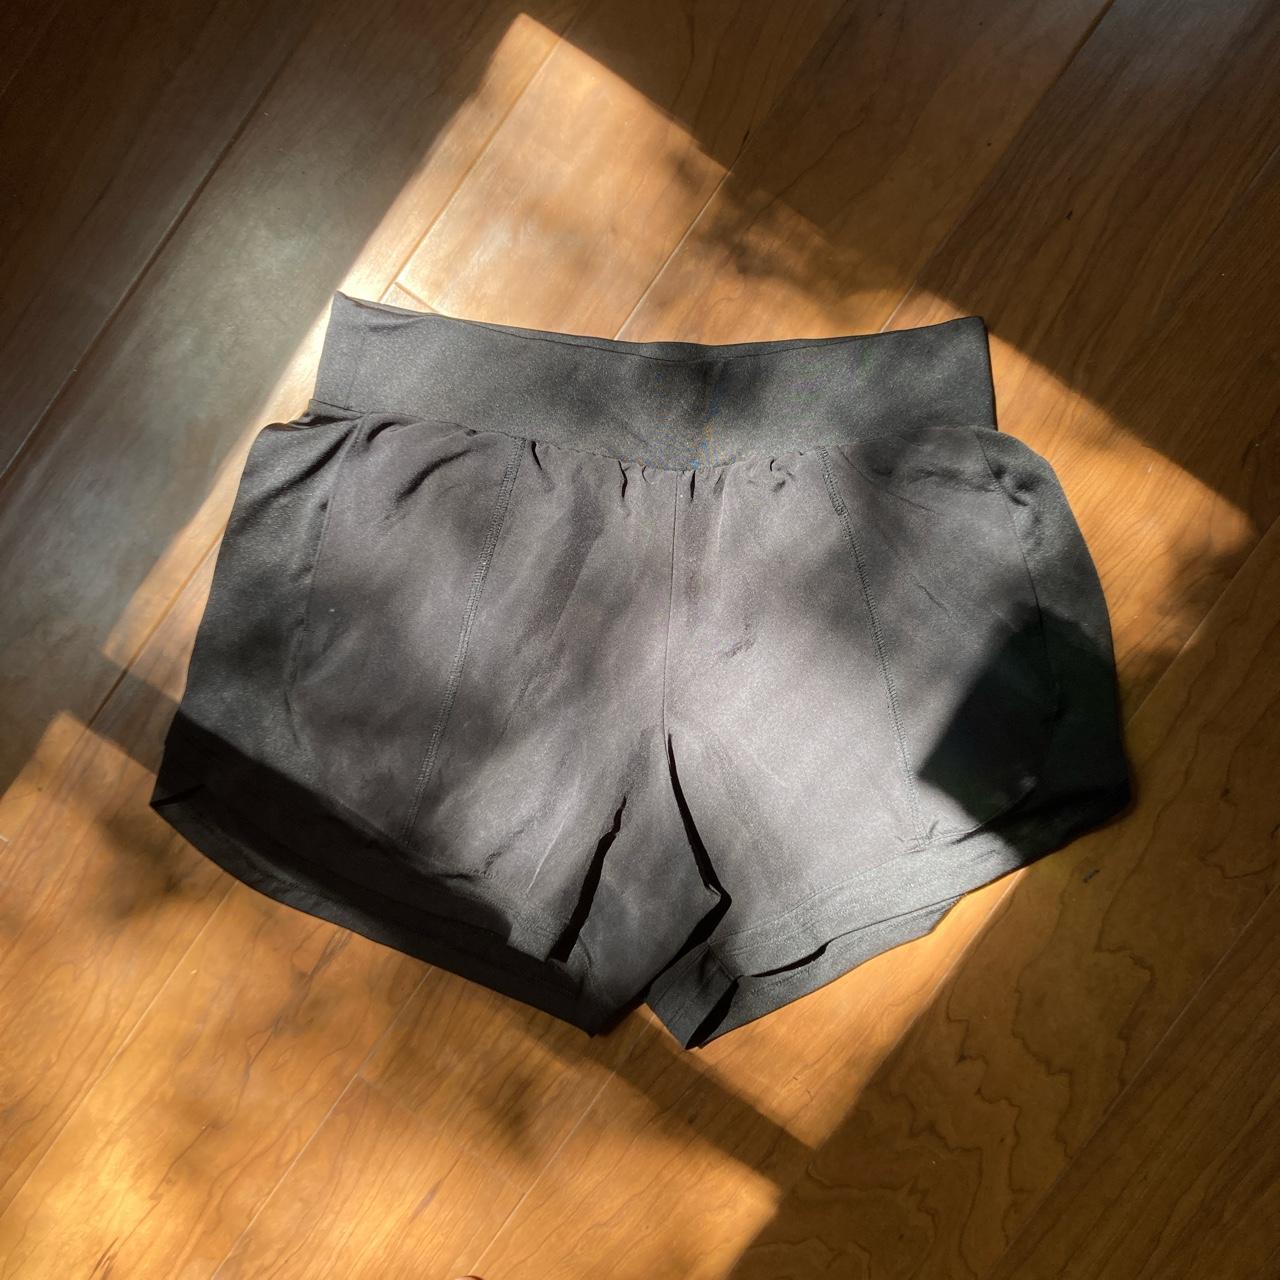 Running shorts with no liner - Depop